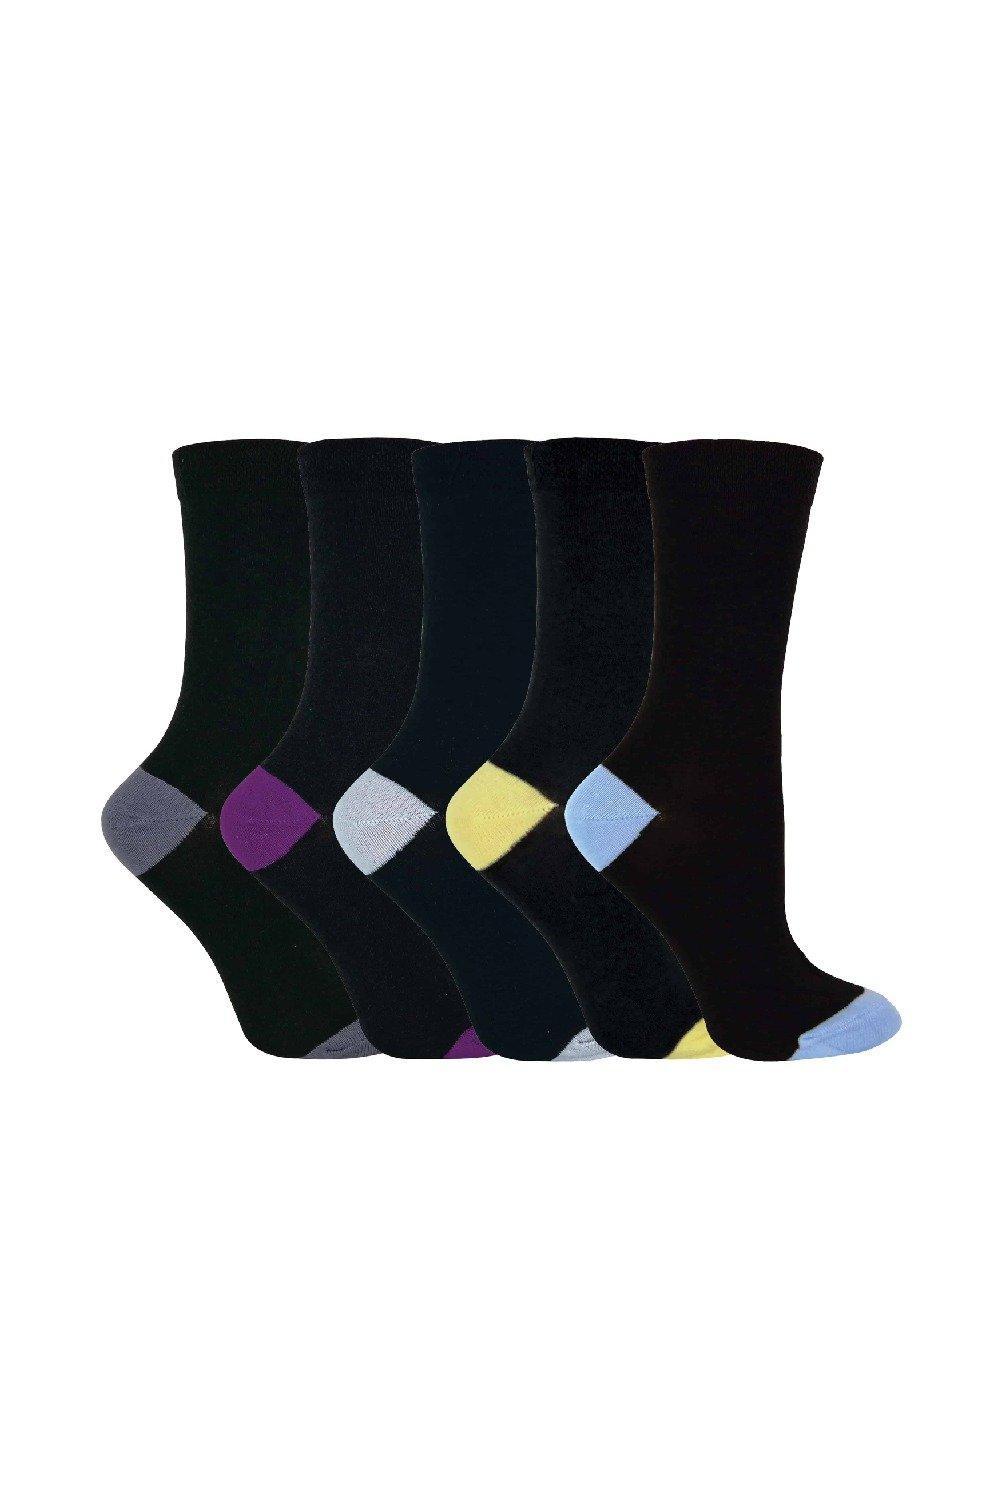 Cotton Rich Soft Top Coloured Heel & Toe Socks